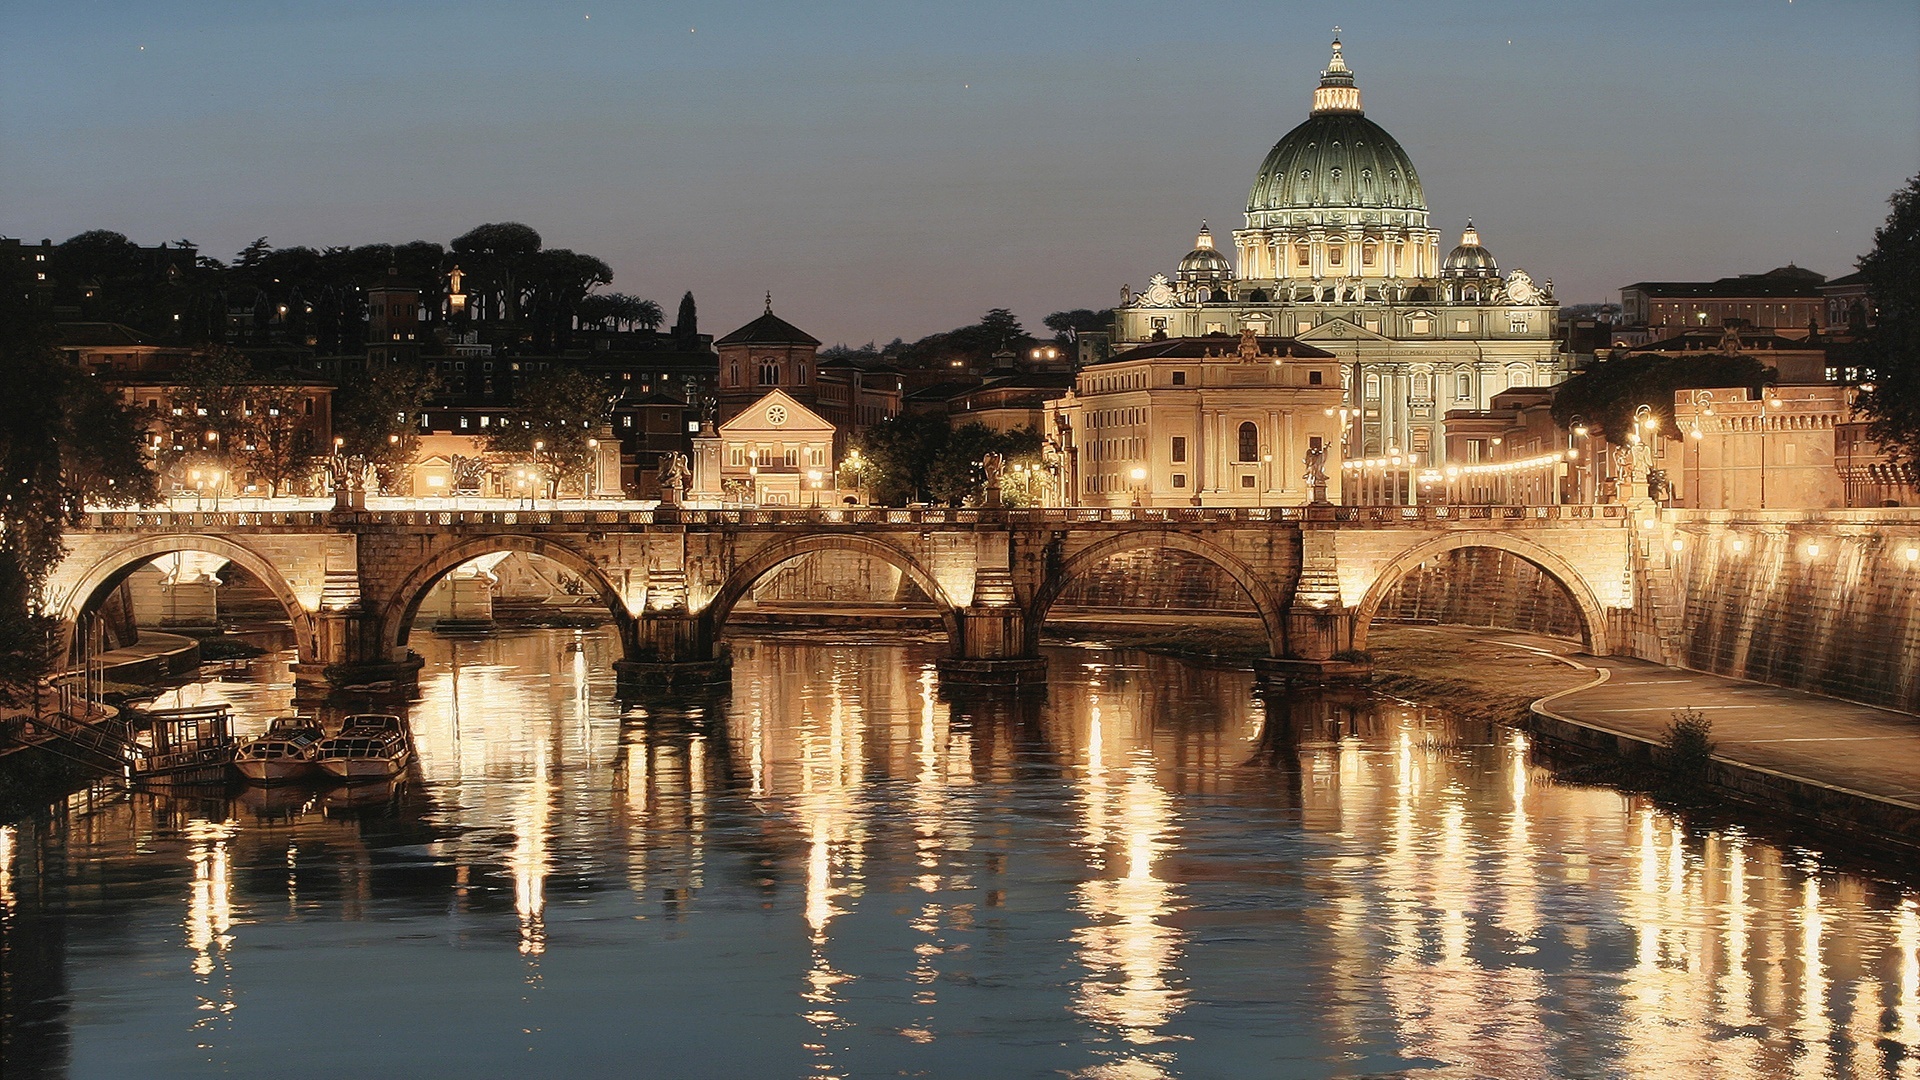 Rome: One of the holiest Catholic shrines, Saint Peter's Basilica. 1920x1080 Full HD Background.